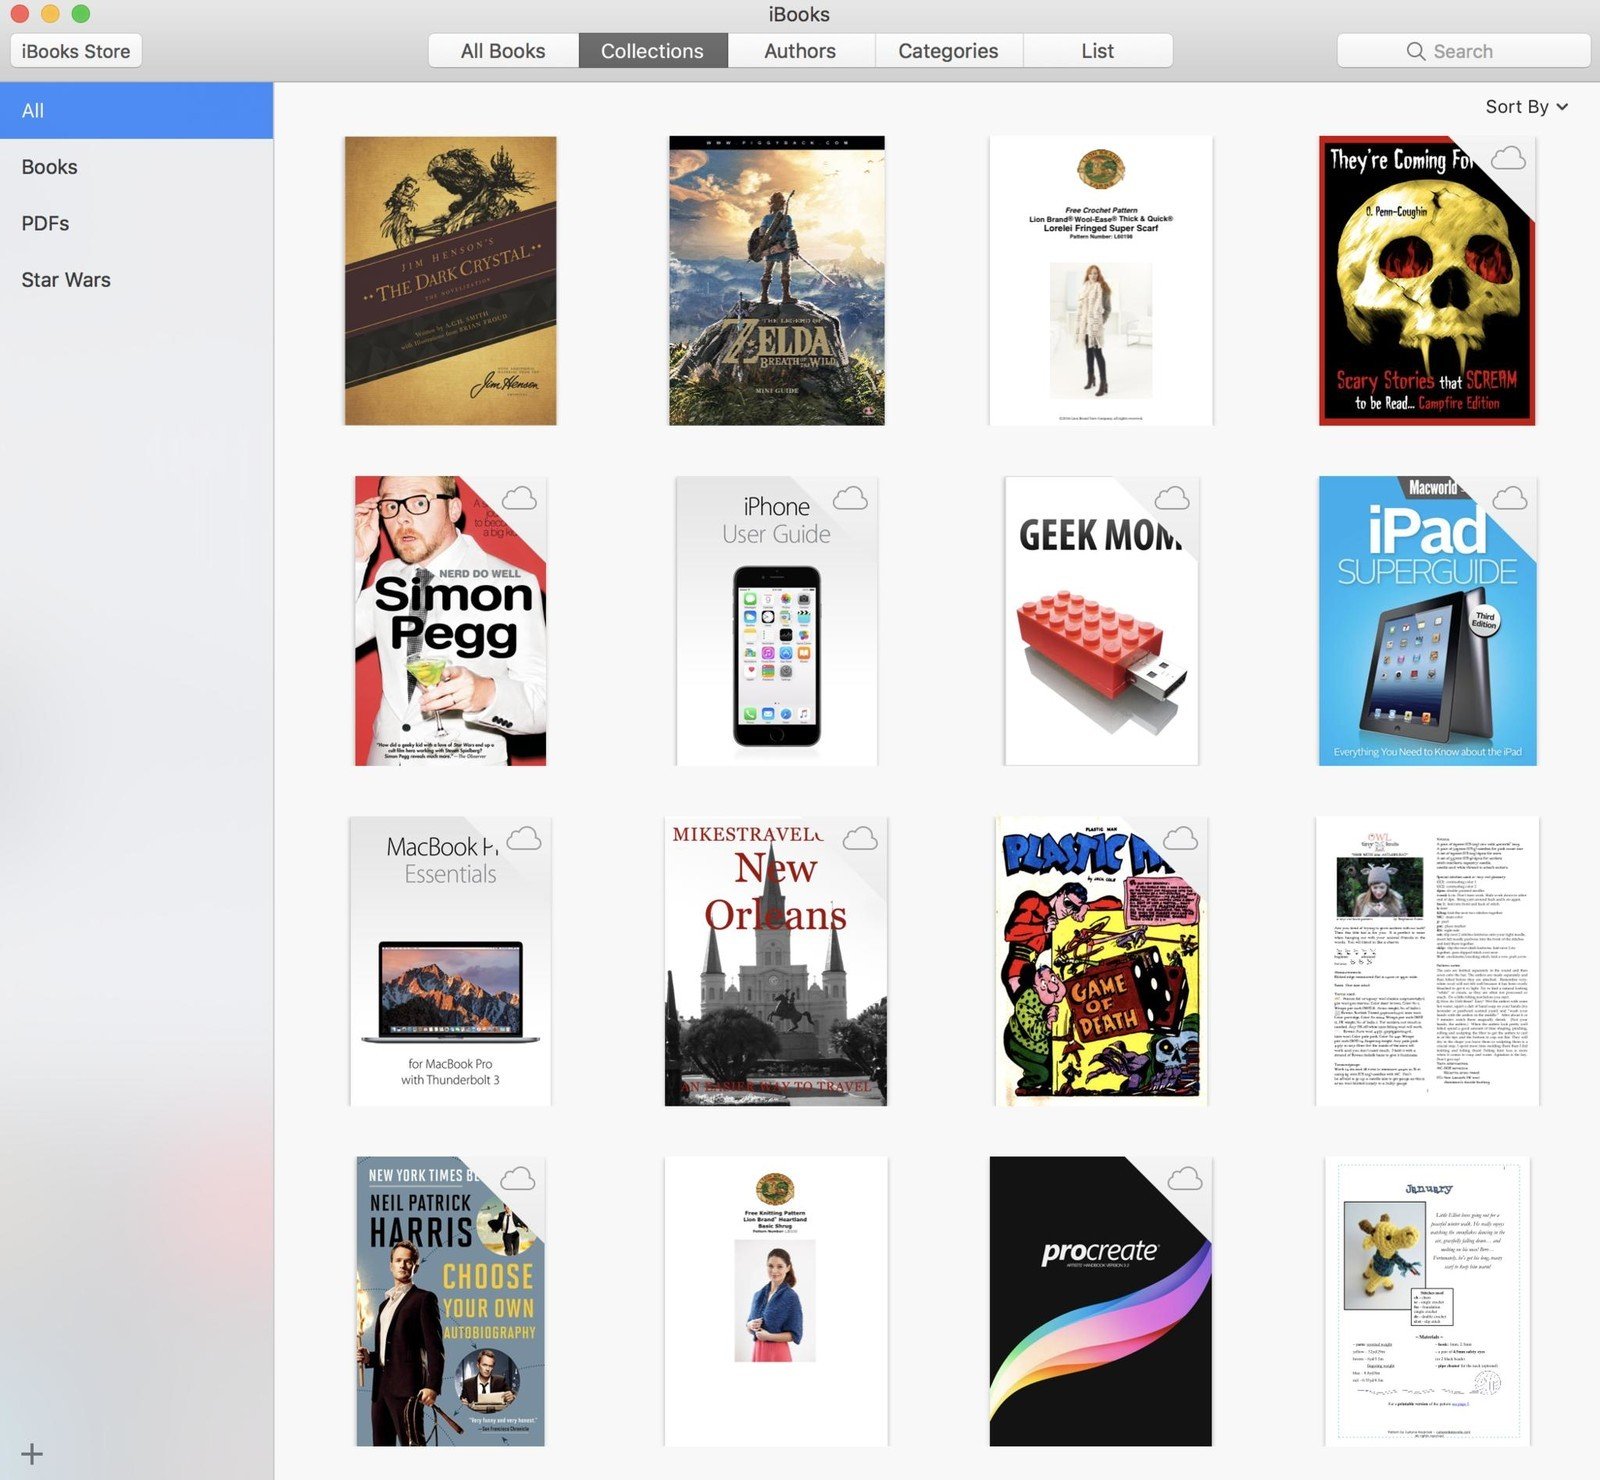 Adobe reader for mac